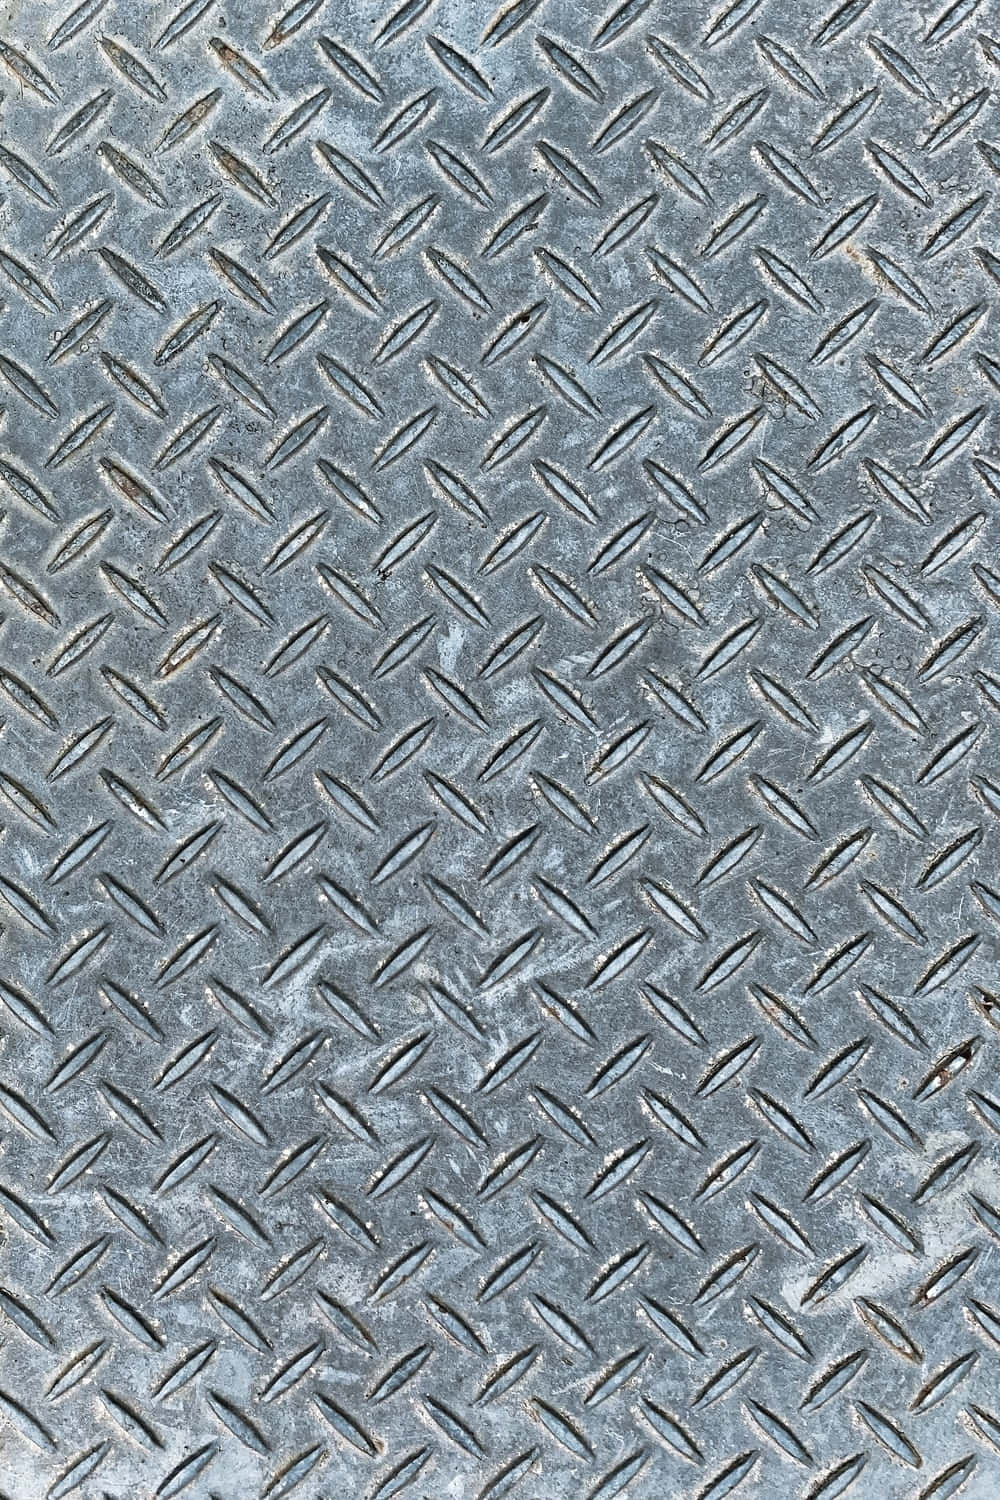 A Close Up Of A Metal Diamond Plate